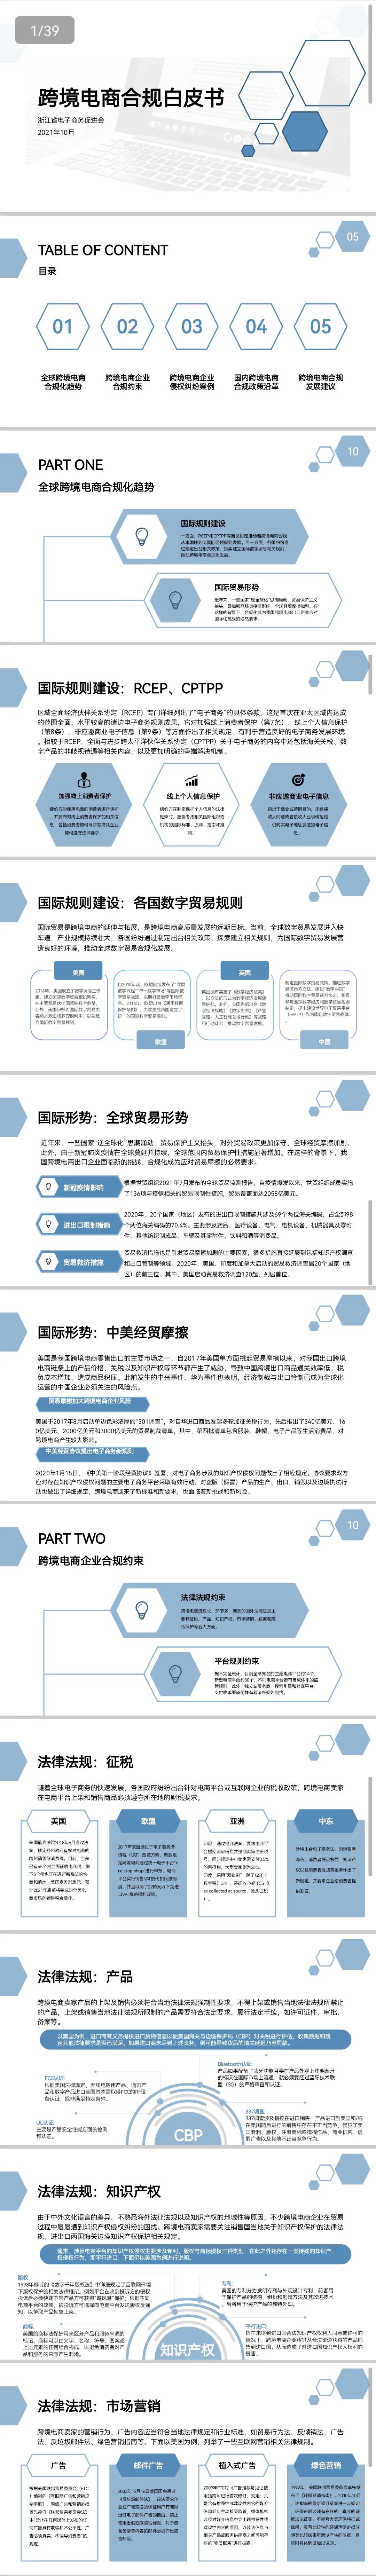 《<a href='https://www.zhouxiaohui.cn/kuajing/
' target='_blank'>跨境电商</a>合规白皮书》发布，企业合规发展全流程指导解读！-第1张图片-周小辉博客